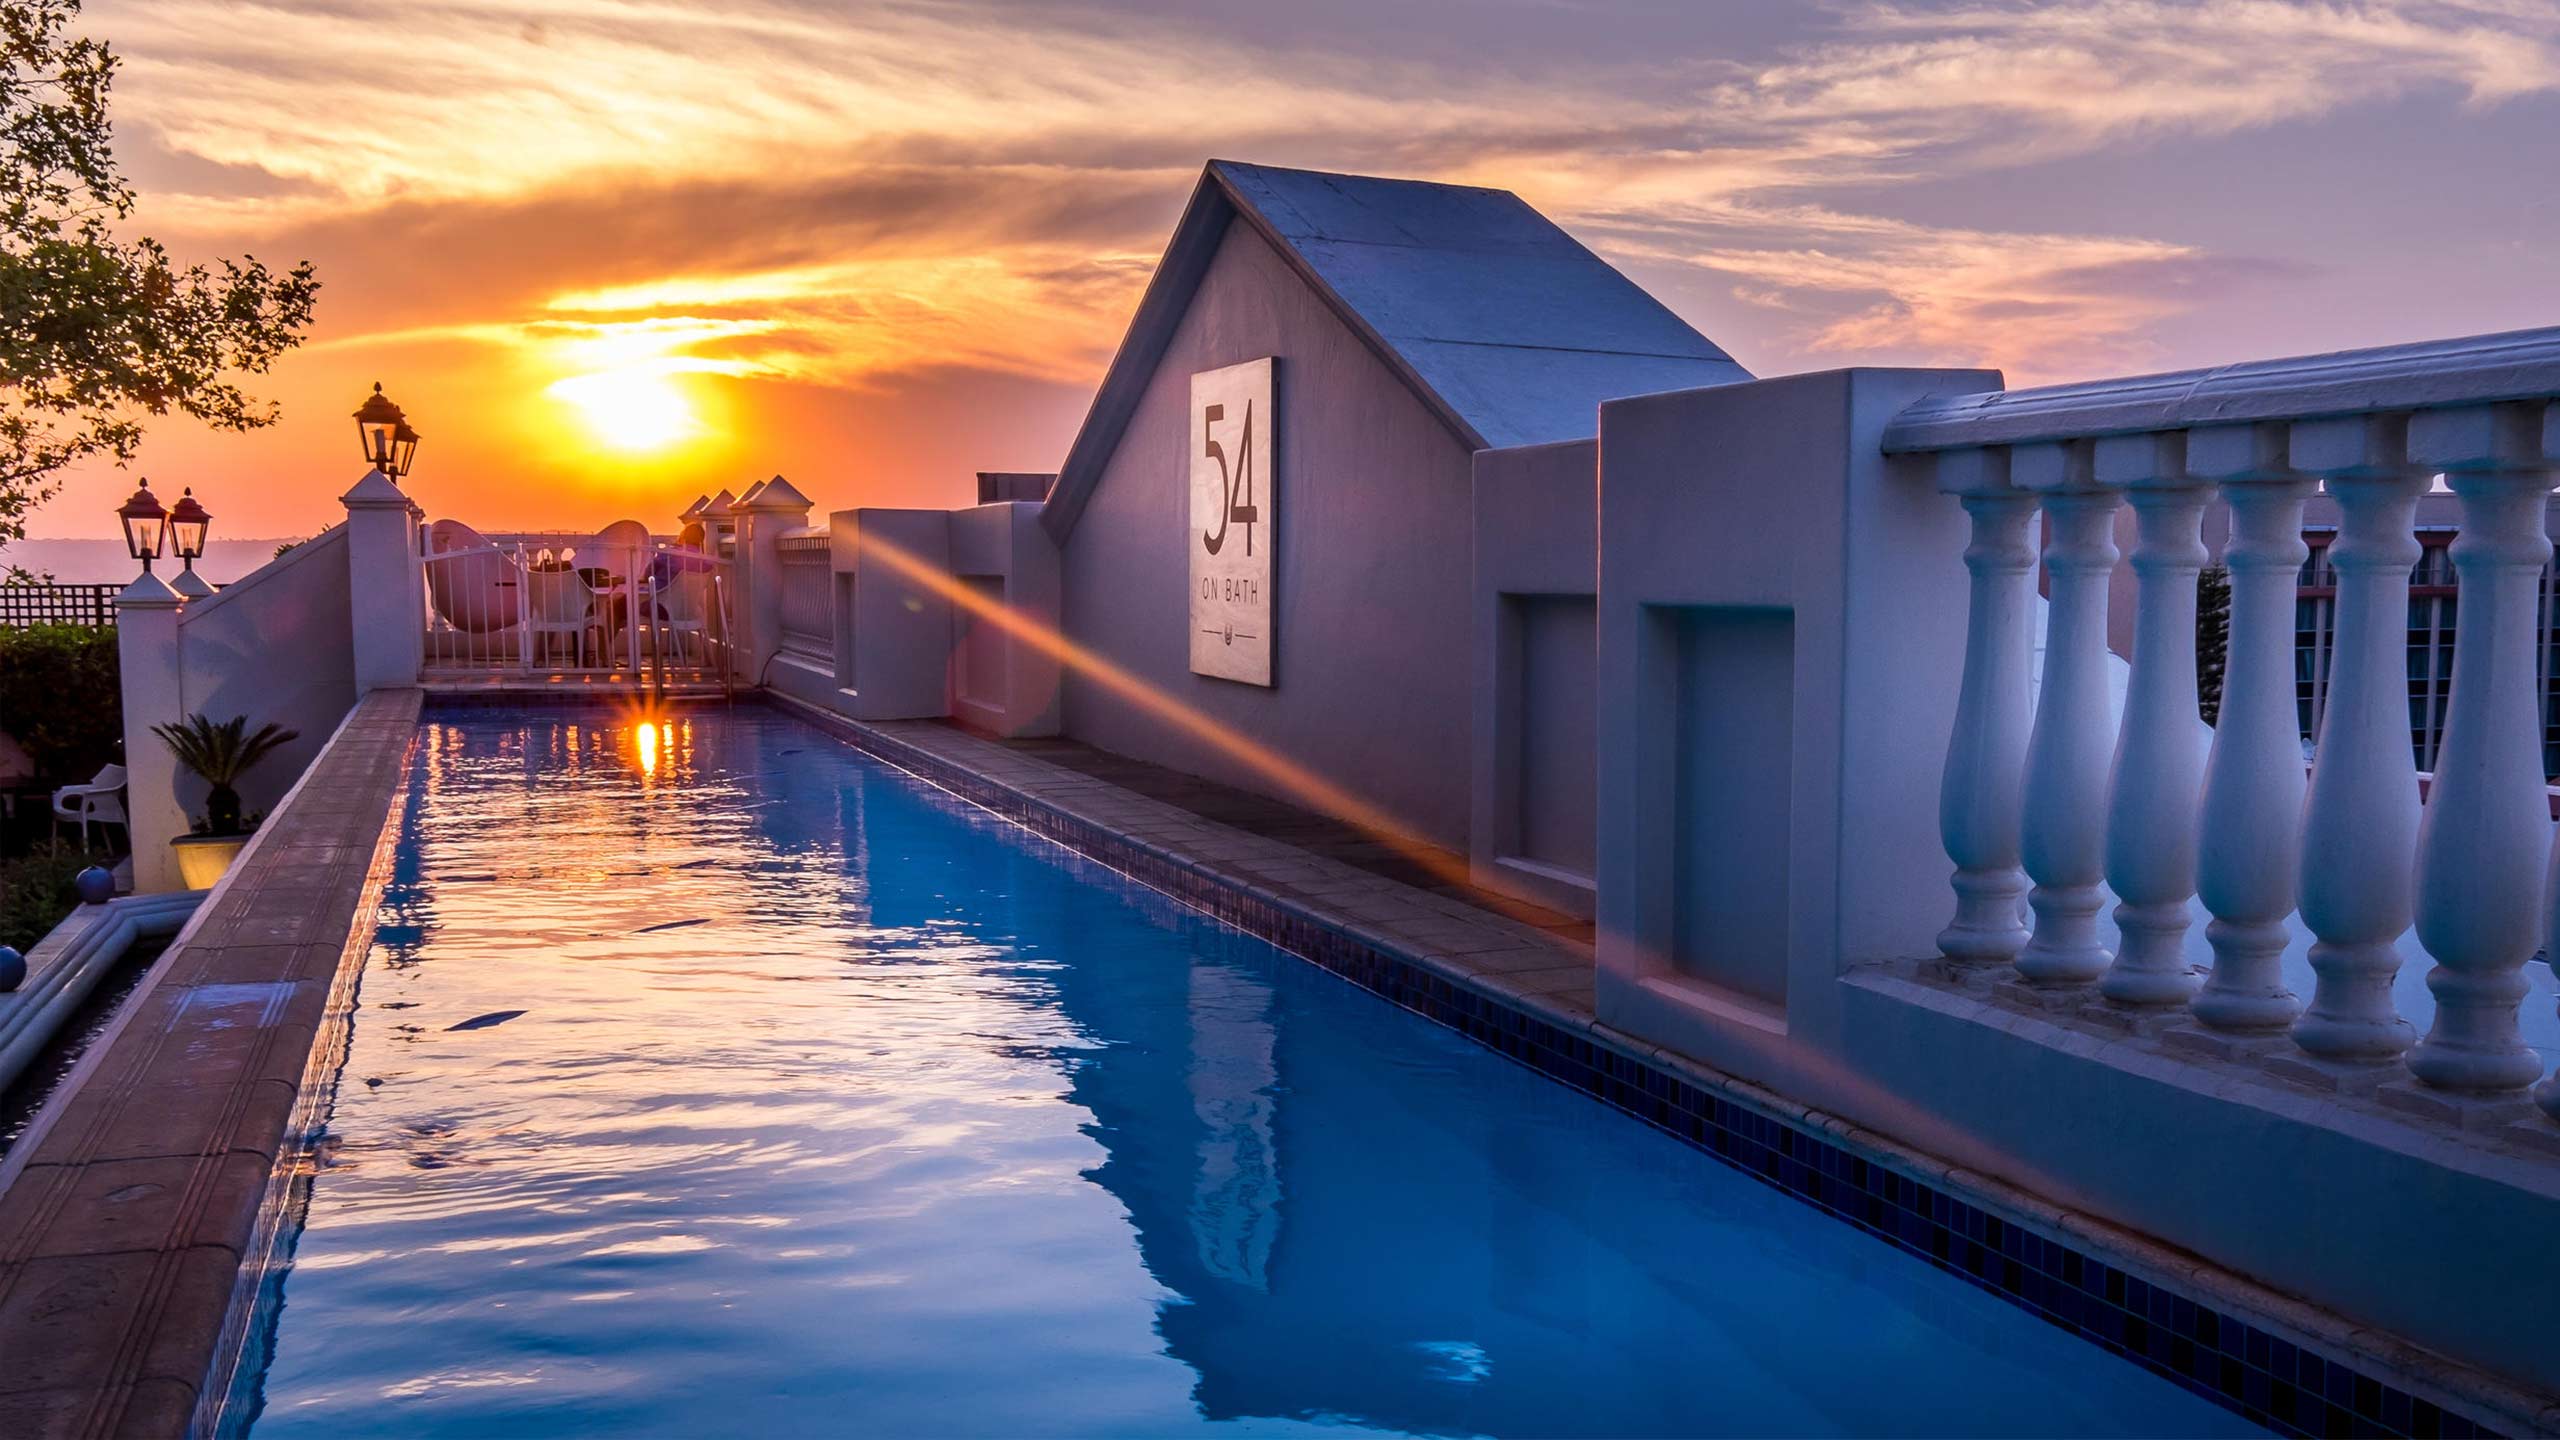 54-on-bath-johannesburg-south-africa-accommodation-pool-sunset